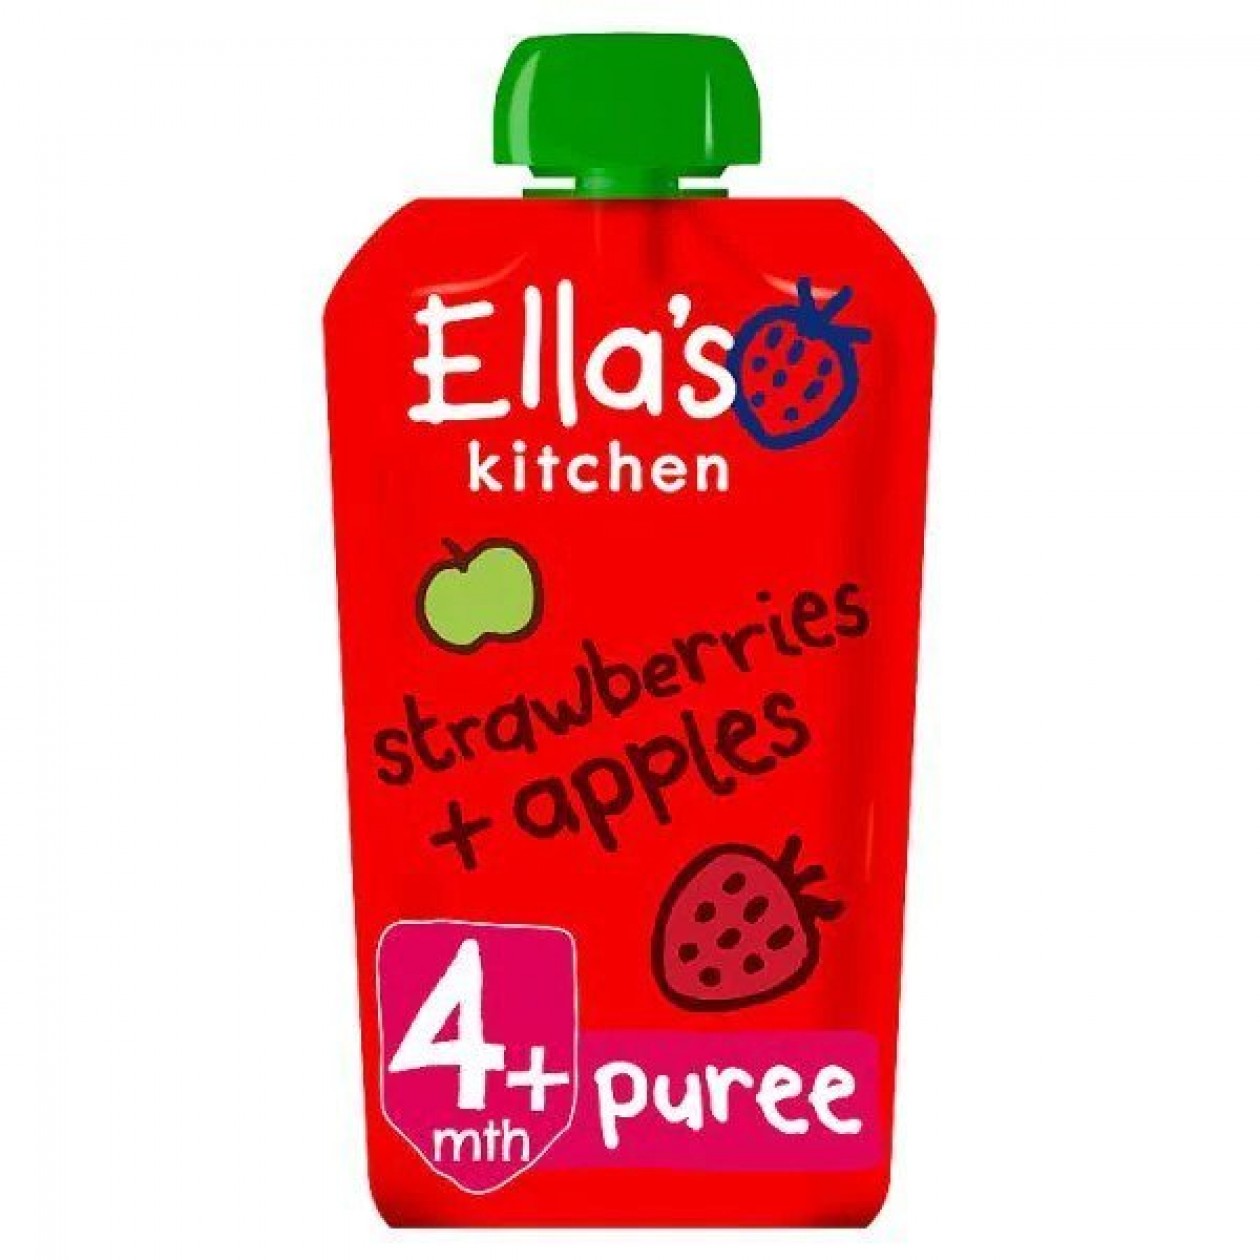 Ella's Kitchen Strawberries & Apples S1, 7 x 120G